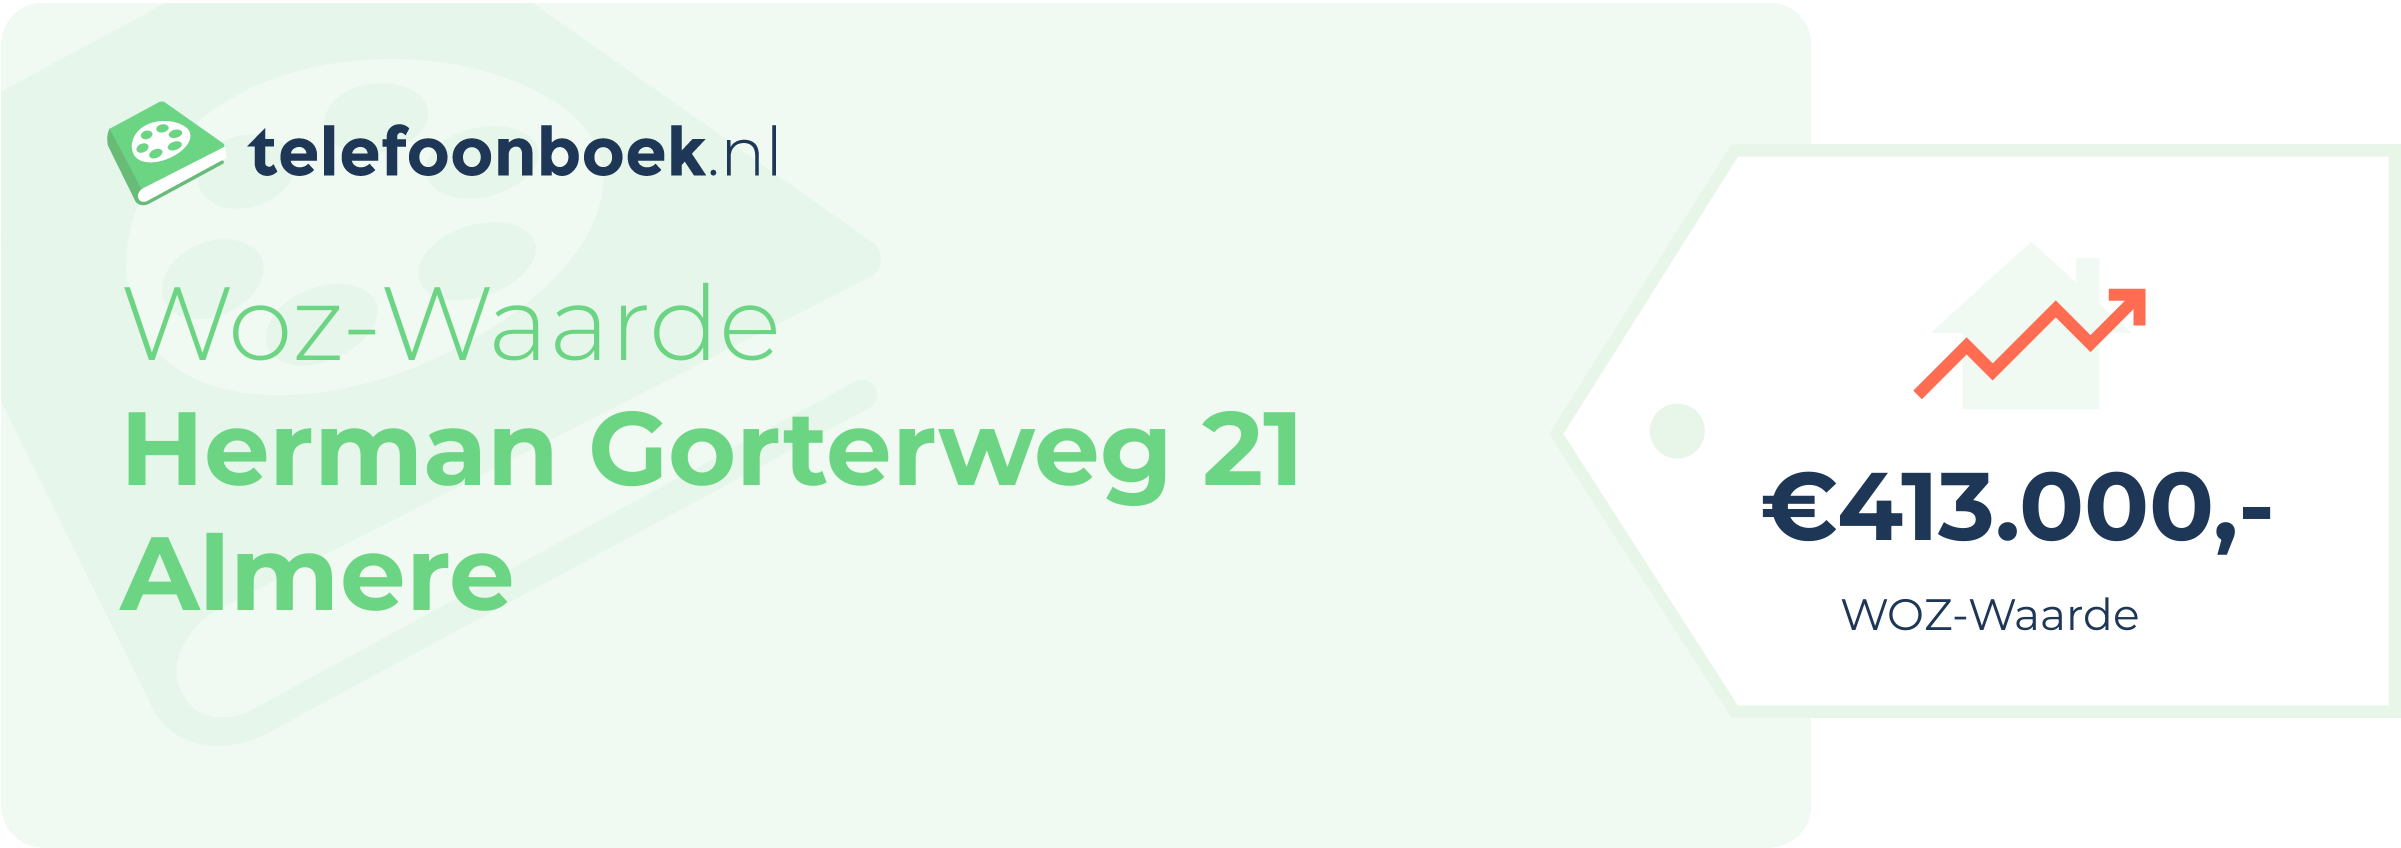 WOZ-waarde Herman Gorterweg 21 Almere